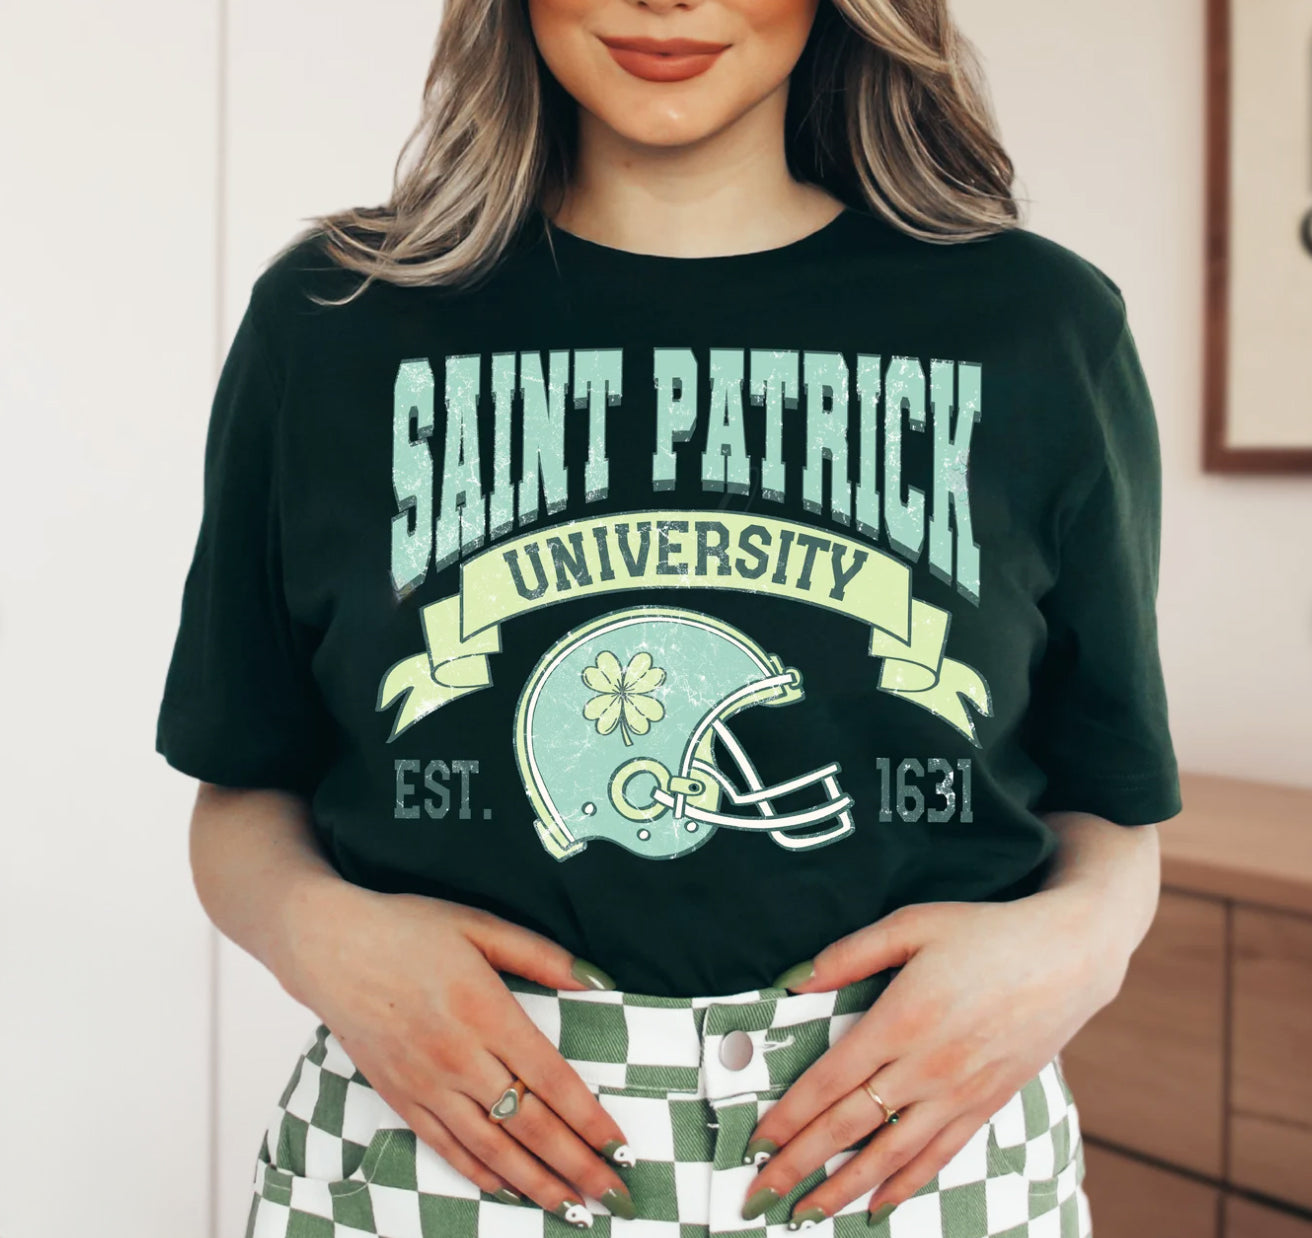 Saint Patrick University Est. 1631 Tee